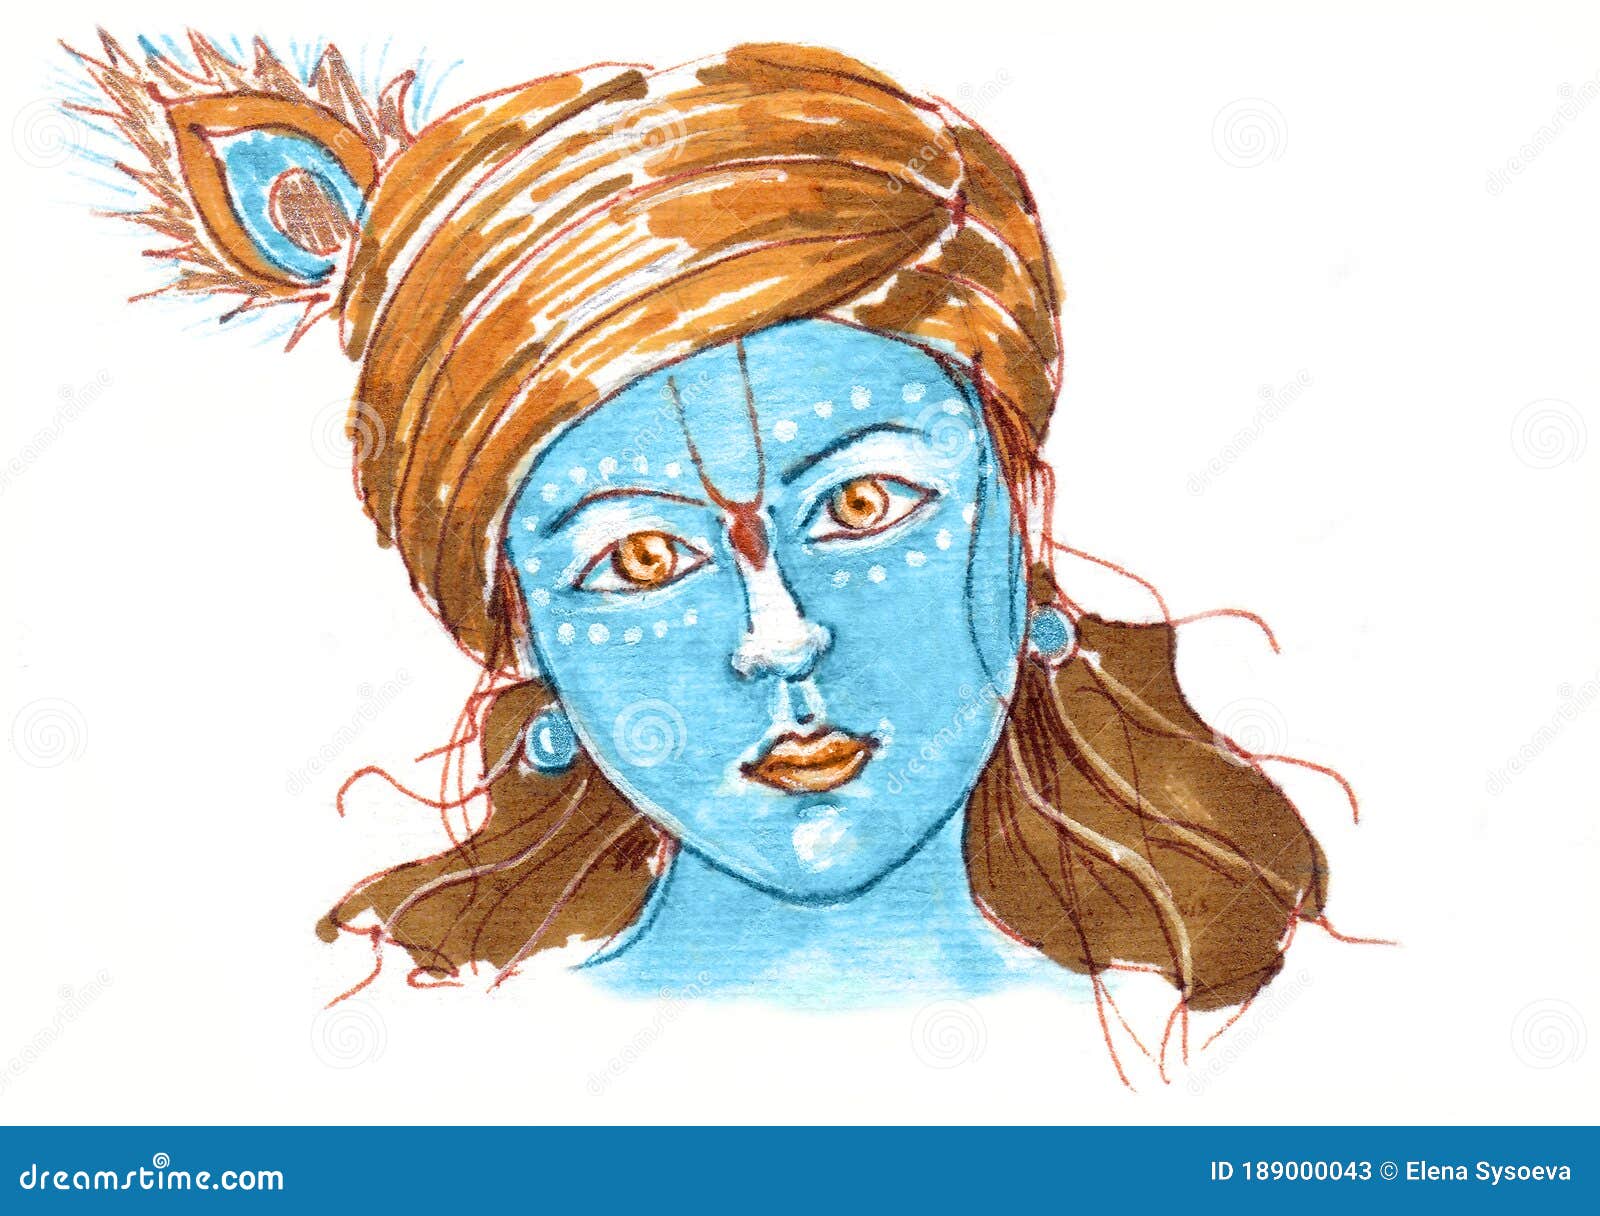 Krishna HD Wallpapers: Download HD images, photos, and wallpapers of Lord  Krishna | Lifestyle Images - News9live